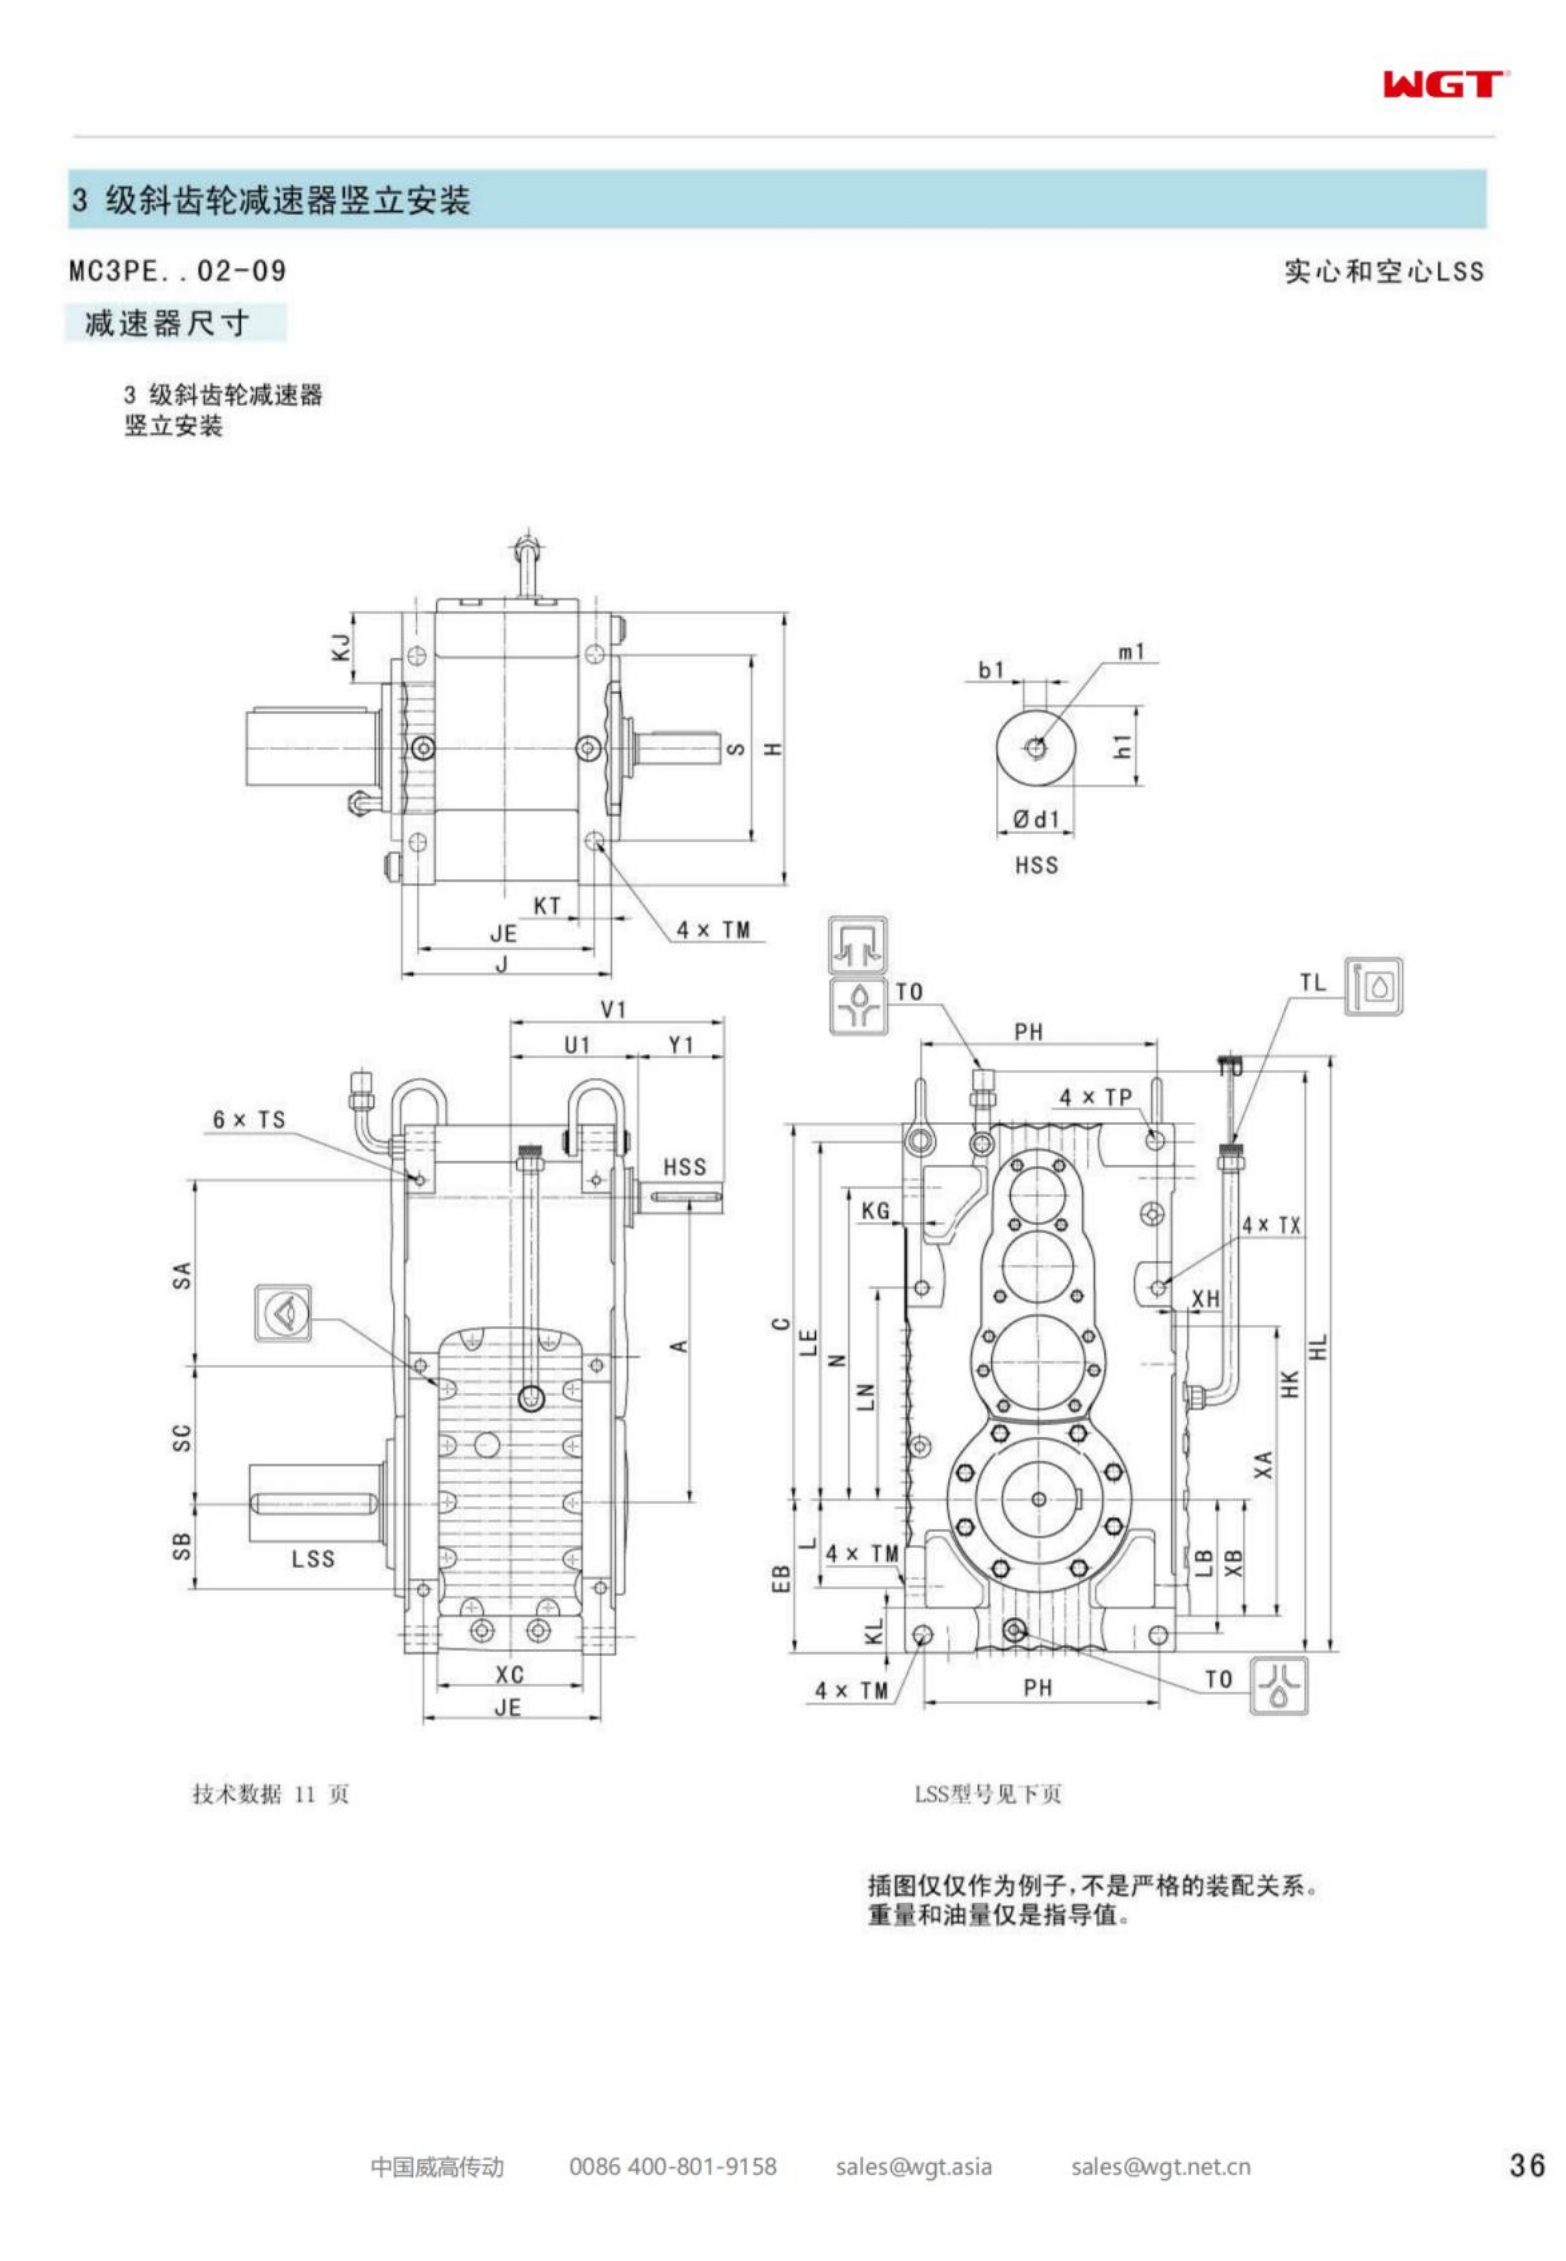 MC3PEST02 replaces _SEW_MC_Series gearbox (patent)